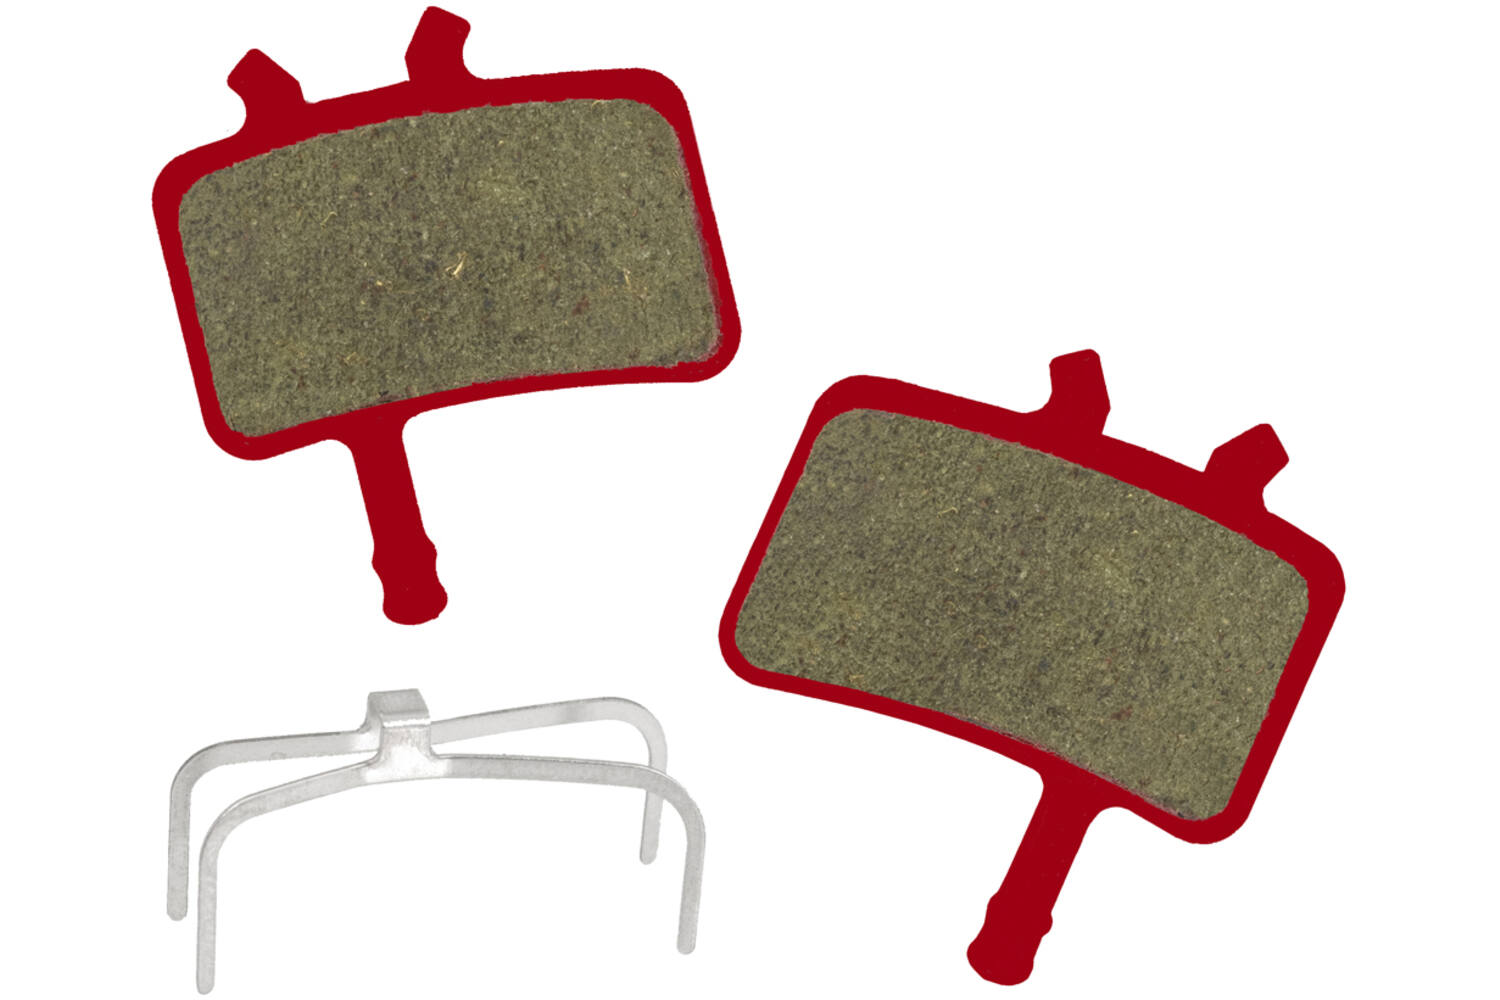 Trivio - remblokjes fiets disc brake pads compatible met avid juicy bb7 - organic